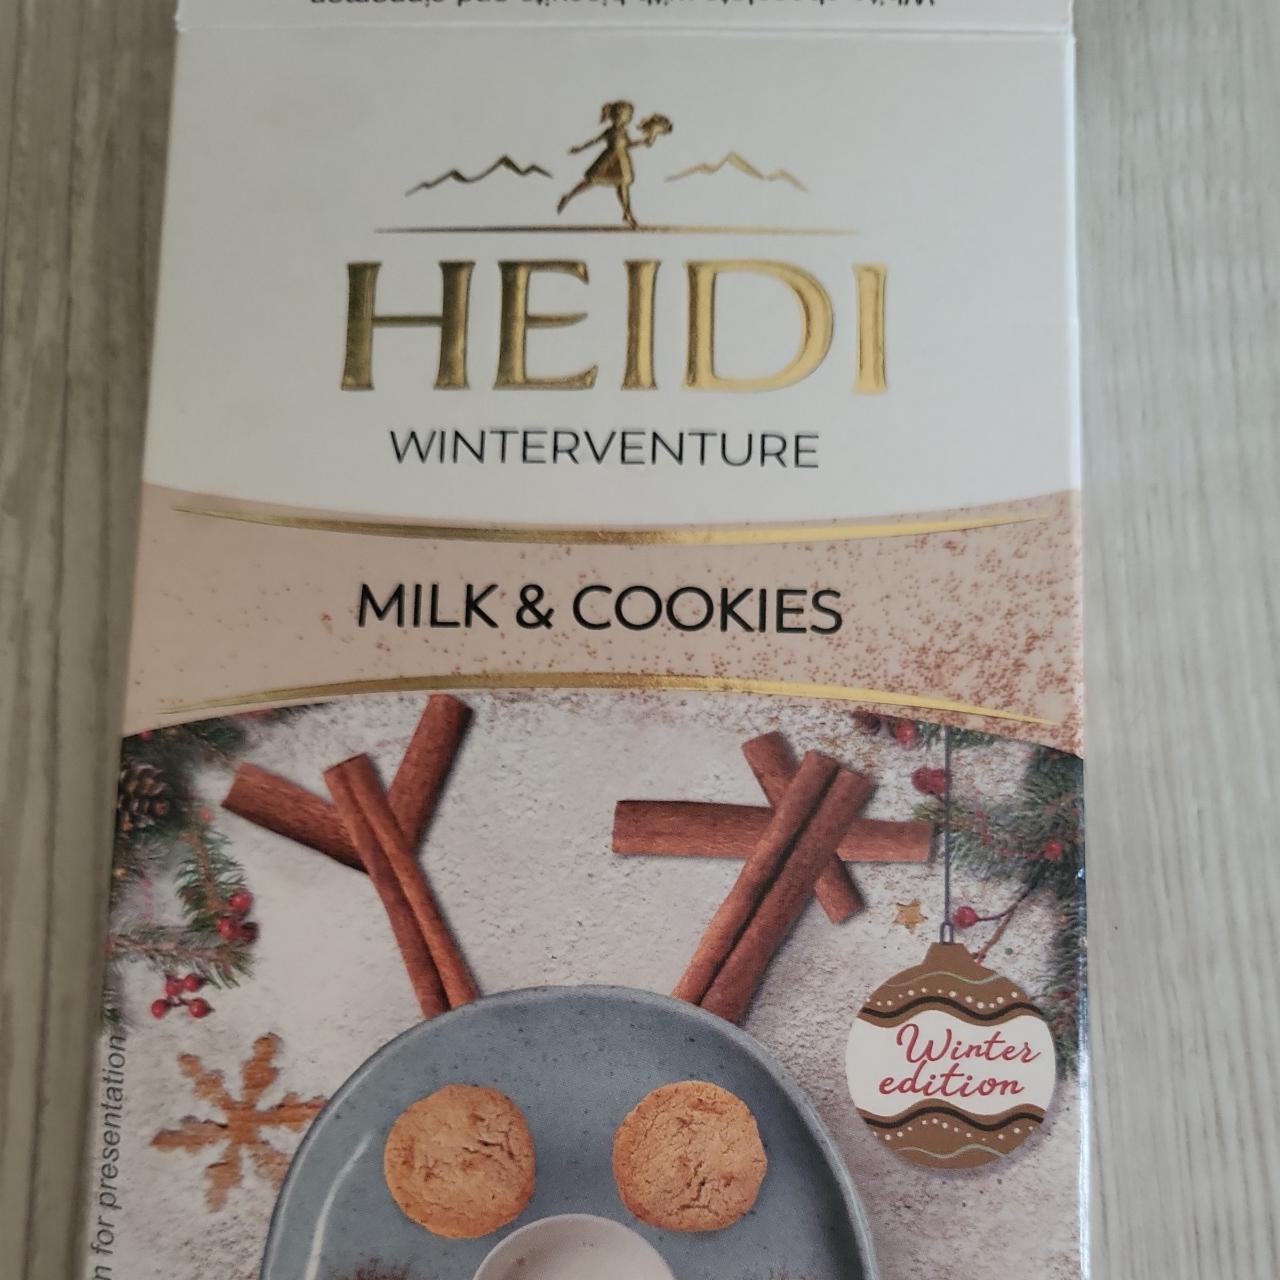 Képek - WinterVenture Milk & Cookies Heidi